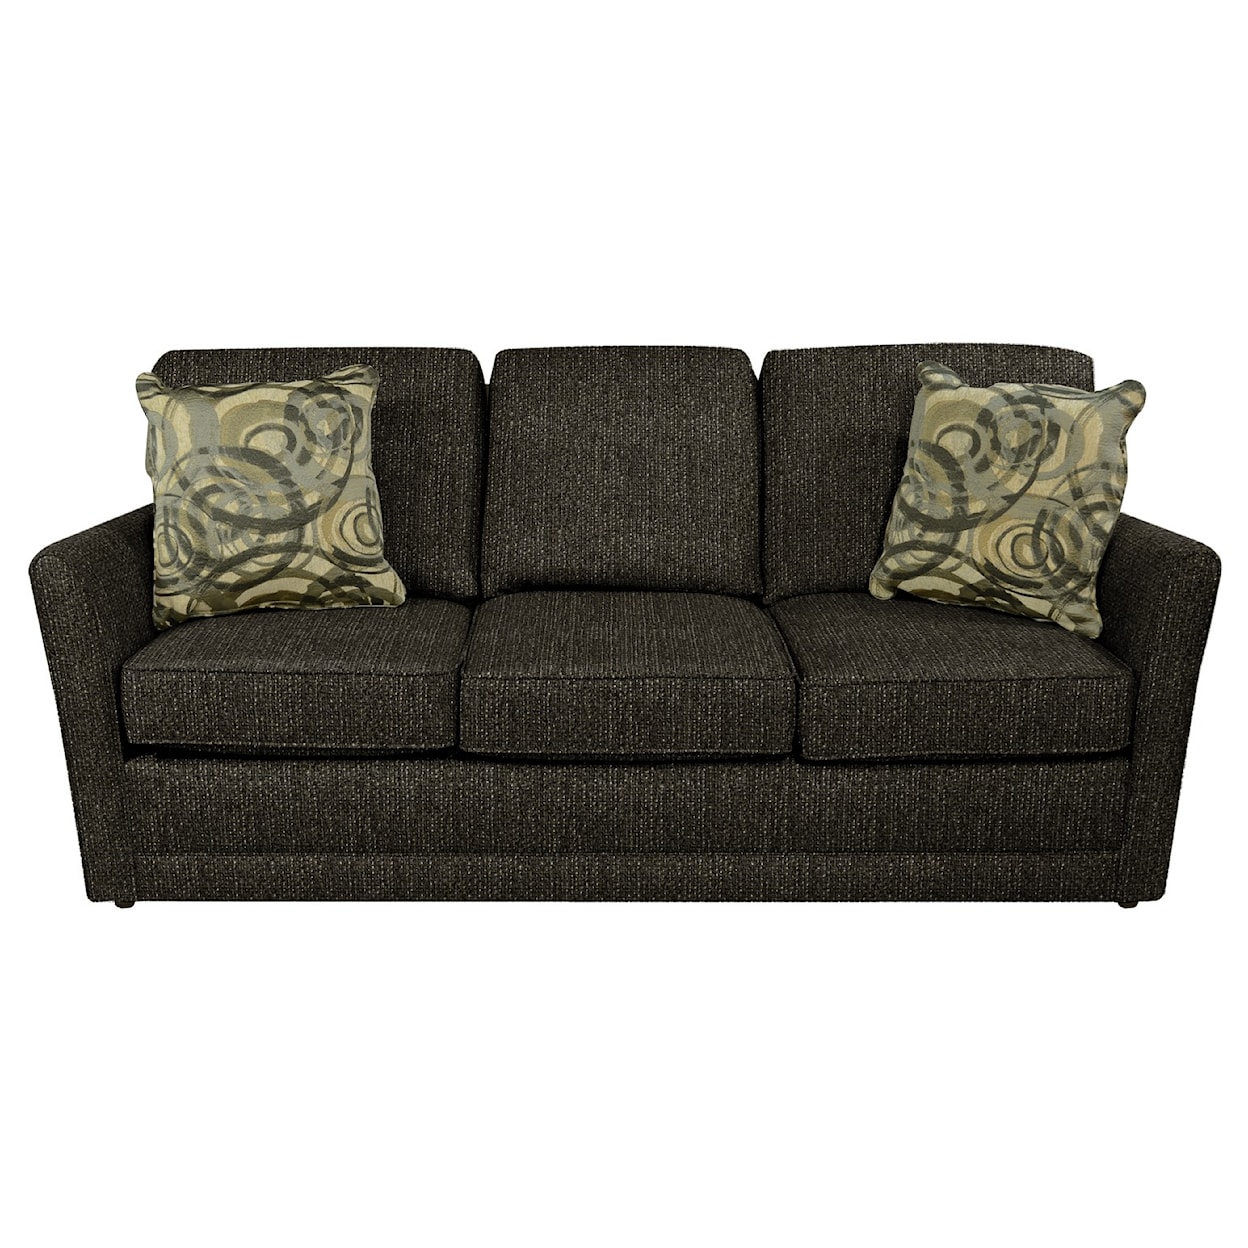 Dimensions 3T00 Series Sofa